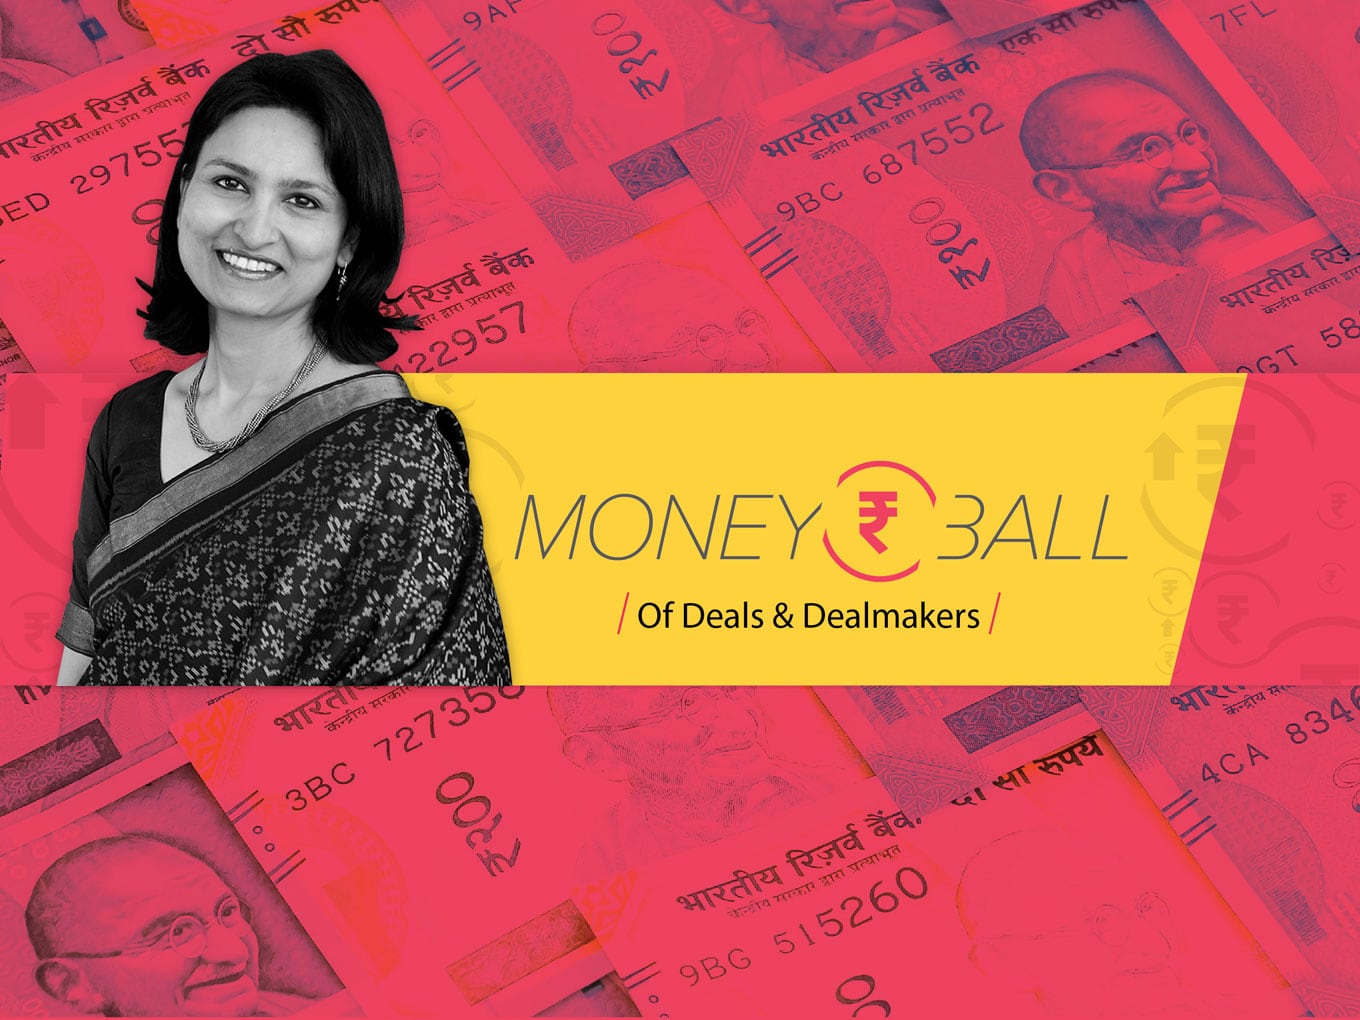 Moneyball: Avaana Capital’s Anjali Bansal Talks About Saving Reeling Startups